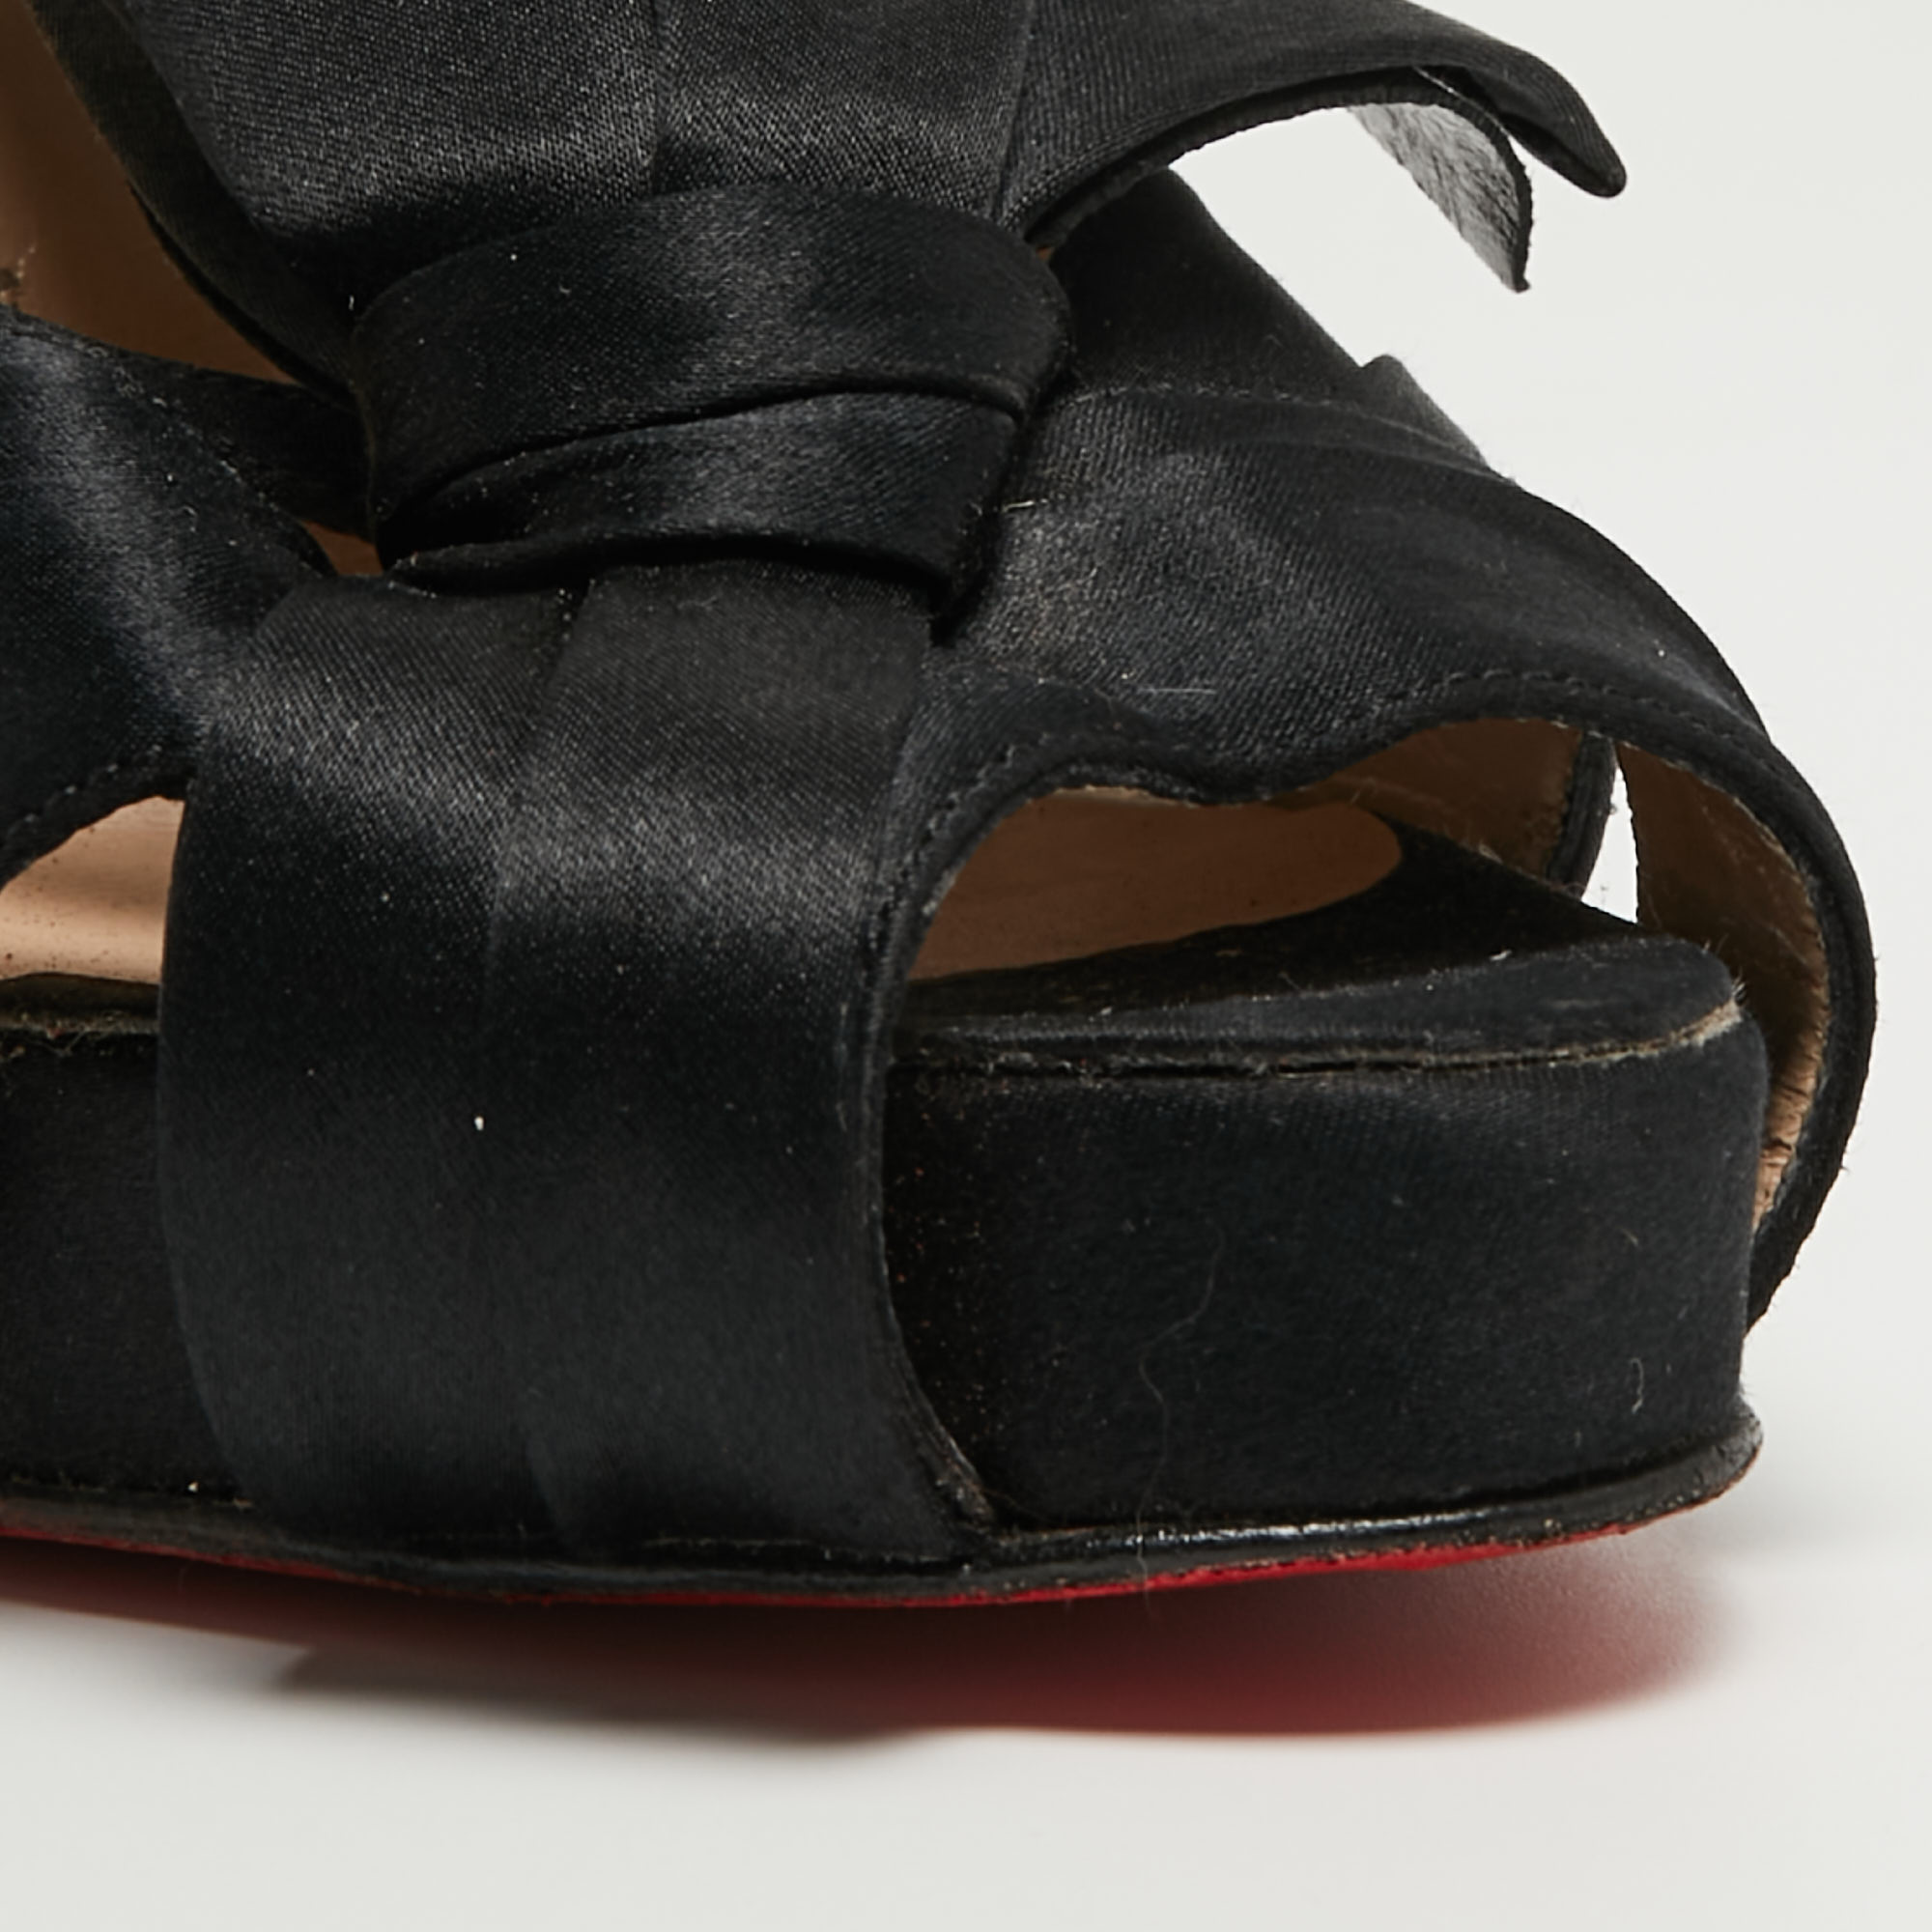 Christian Louboutin Black Satin Bow Slingback Sandals Size 37.5